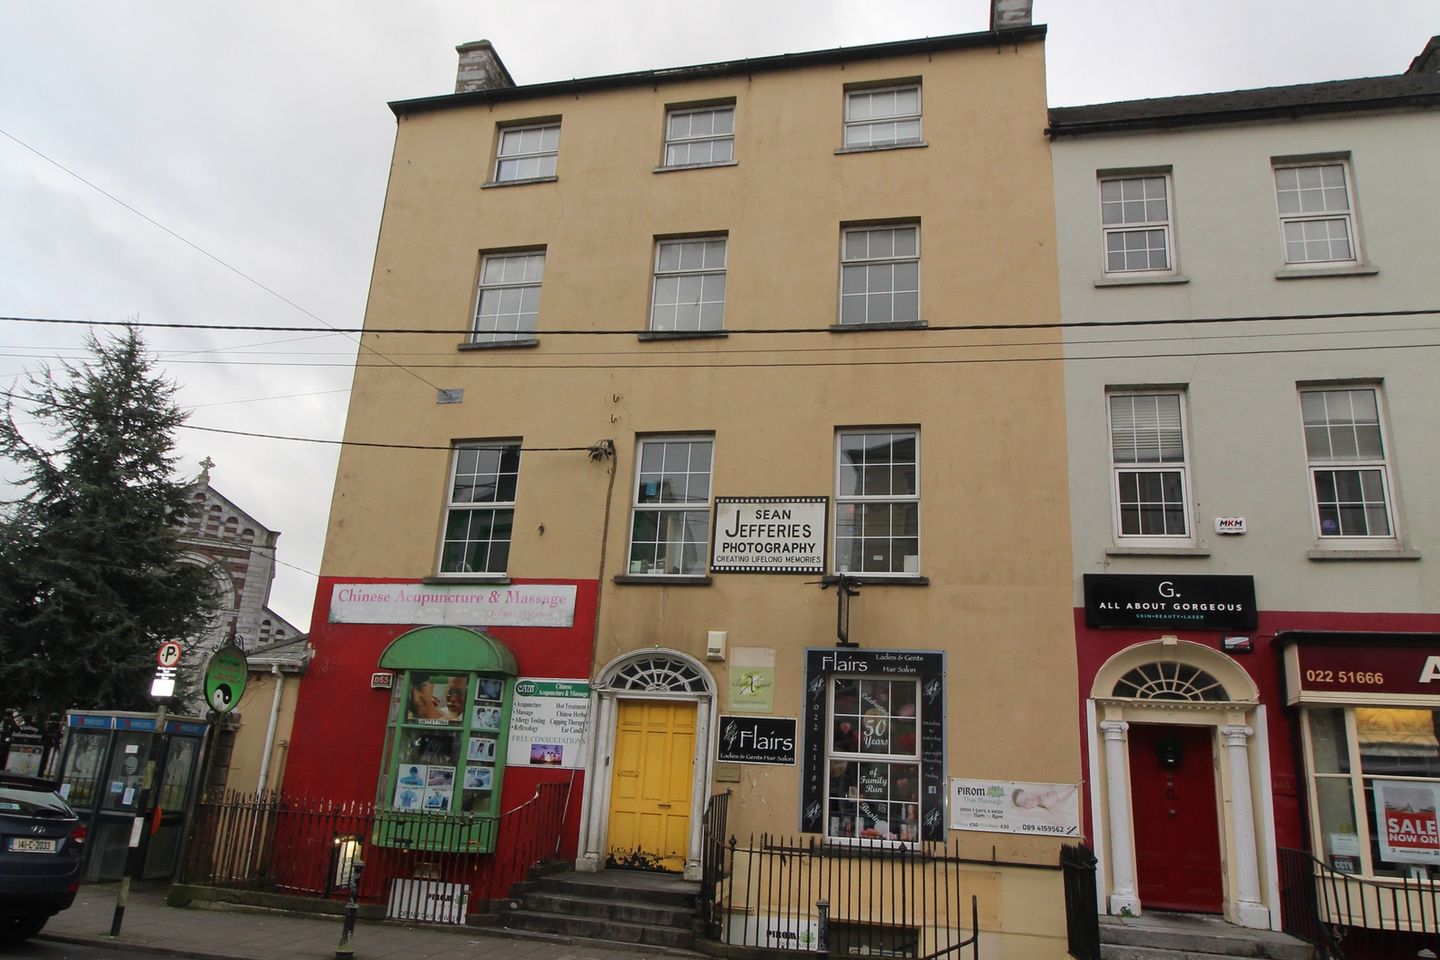 139 Bank Place, Mallow, Co. Cork